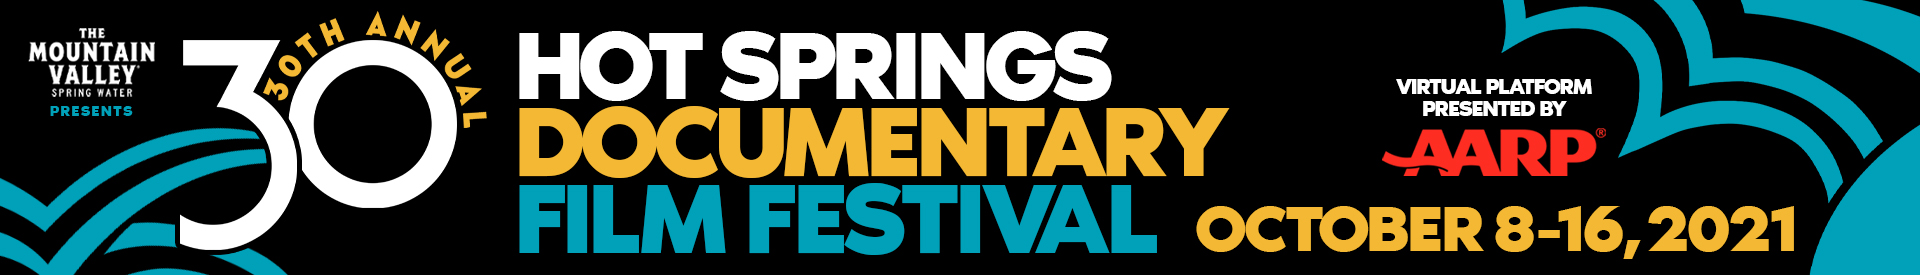 30th Annual Hot Springs Documentary Film Festival